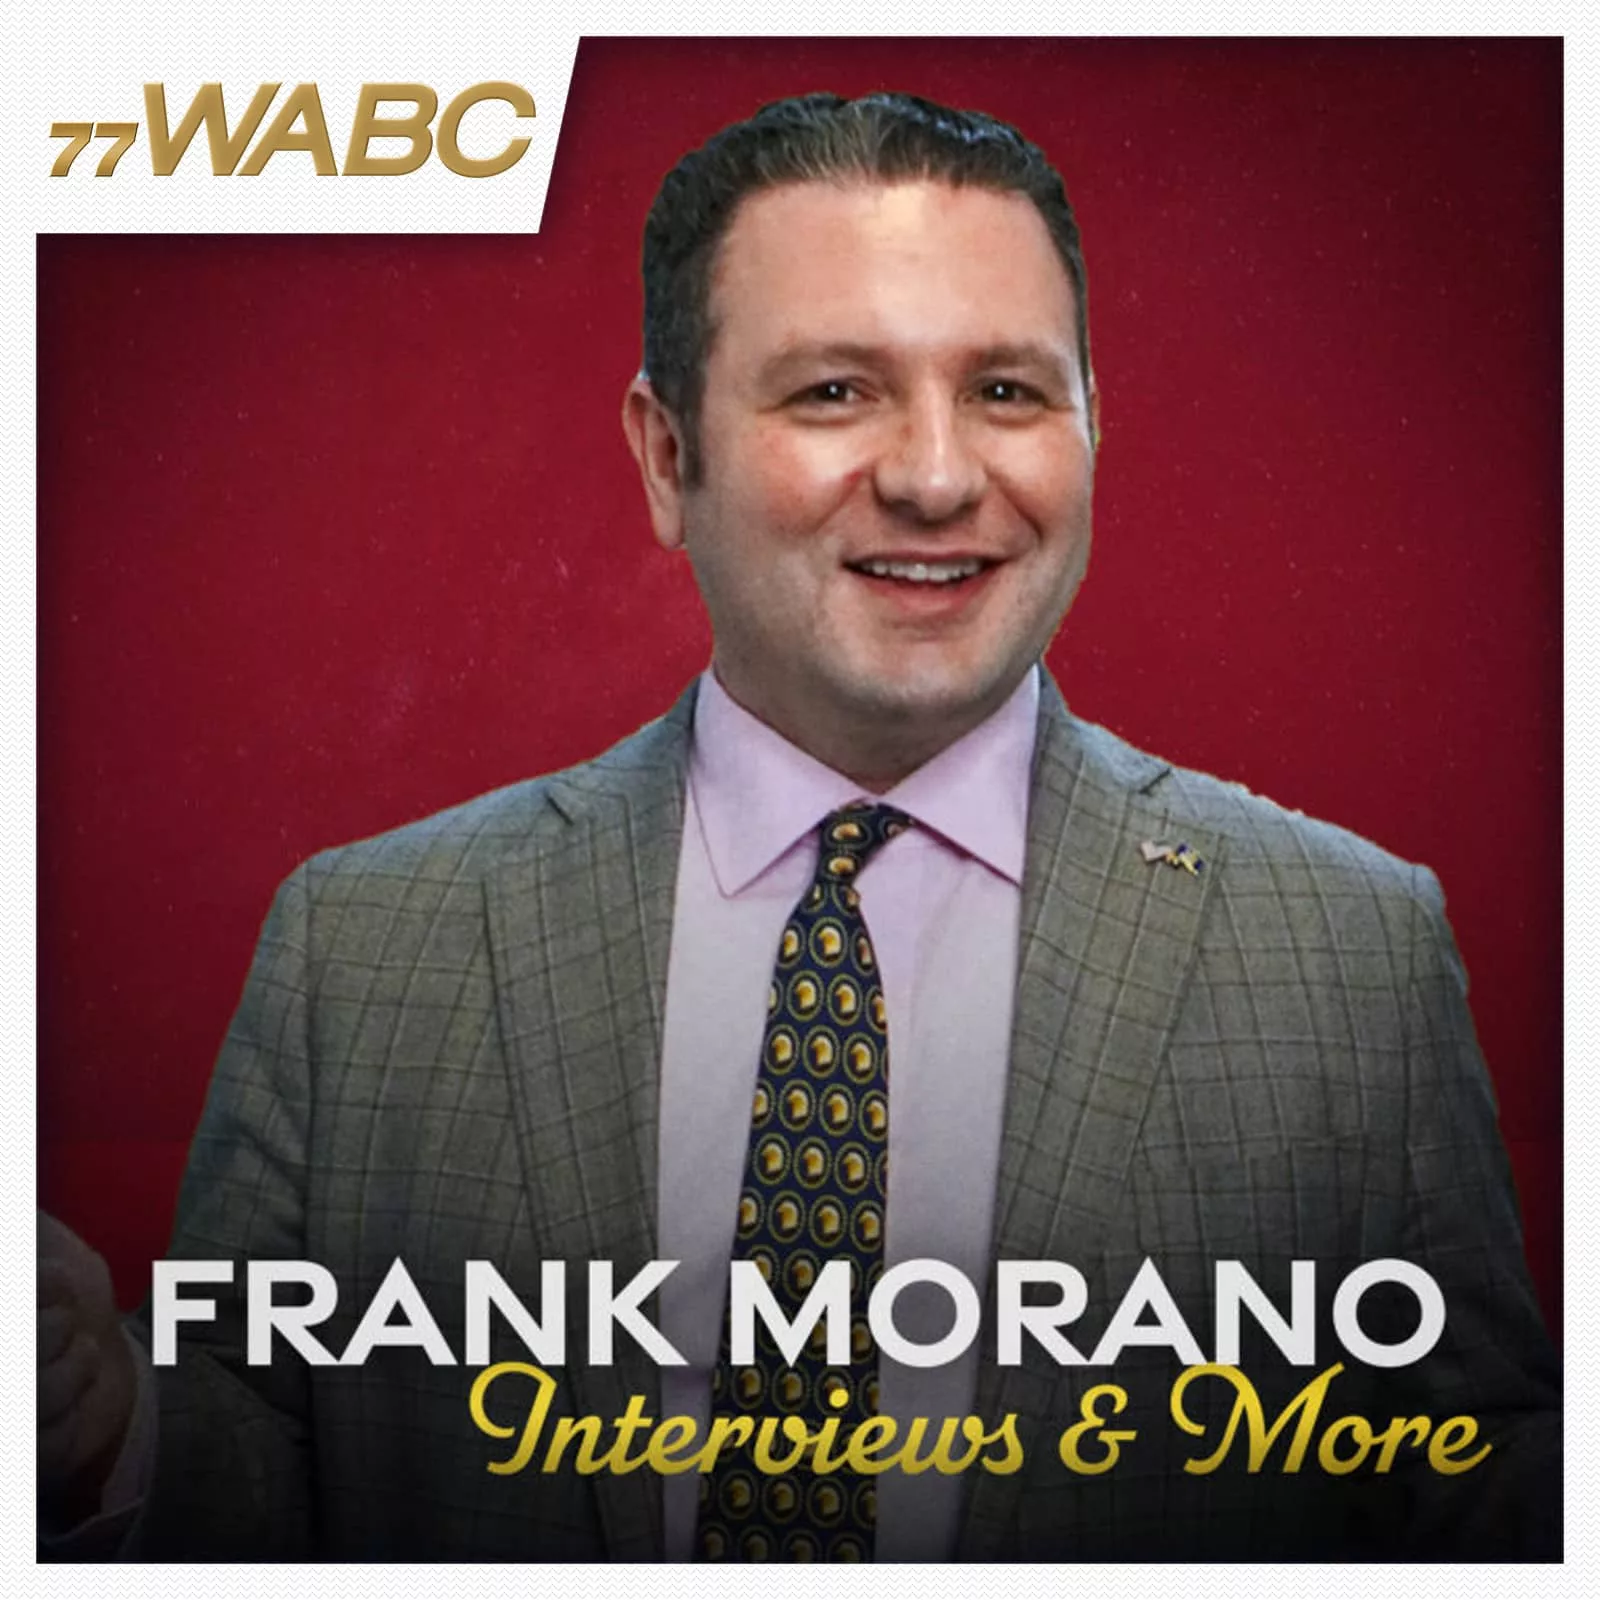 frank-morano-interviews-and-more-podcast-new-logo487677